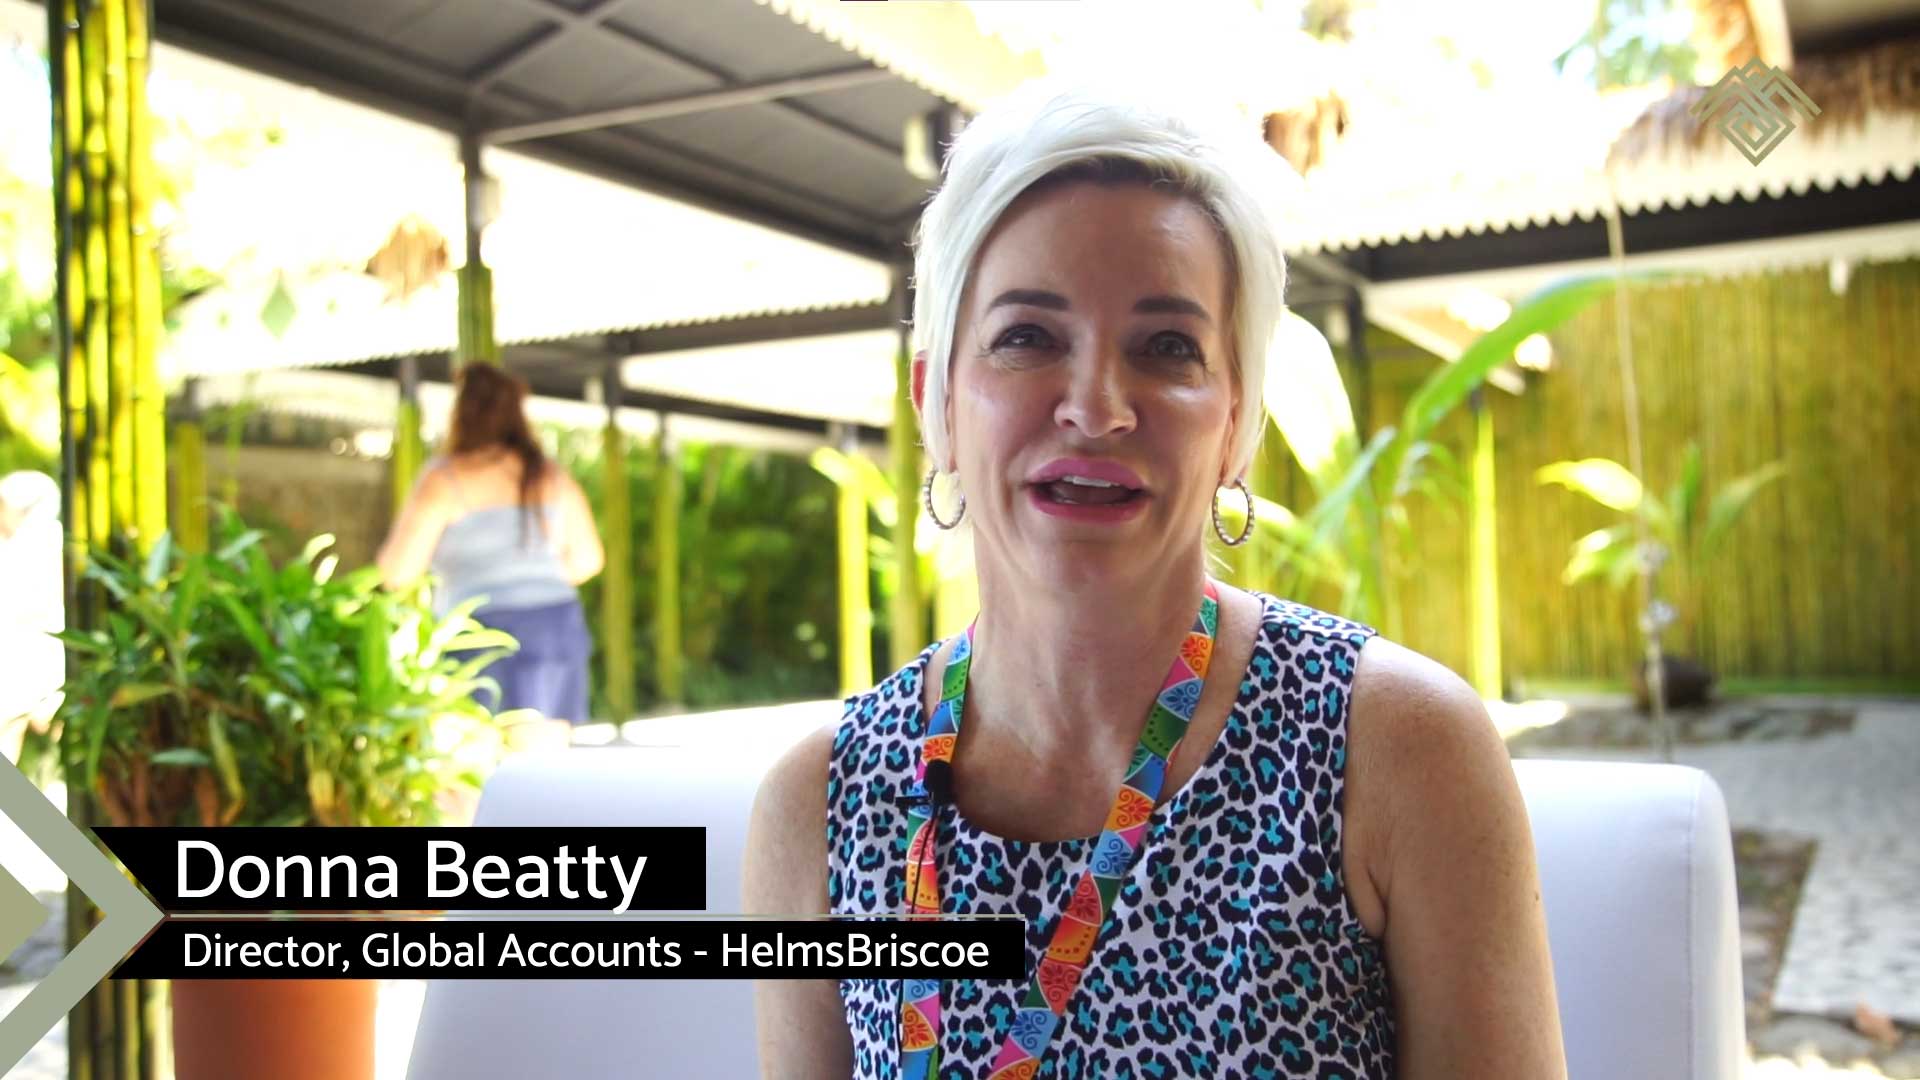 Donna Beatty - Director, Global Accounts - HelmsBriscoe